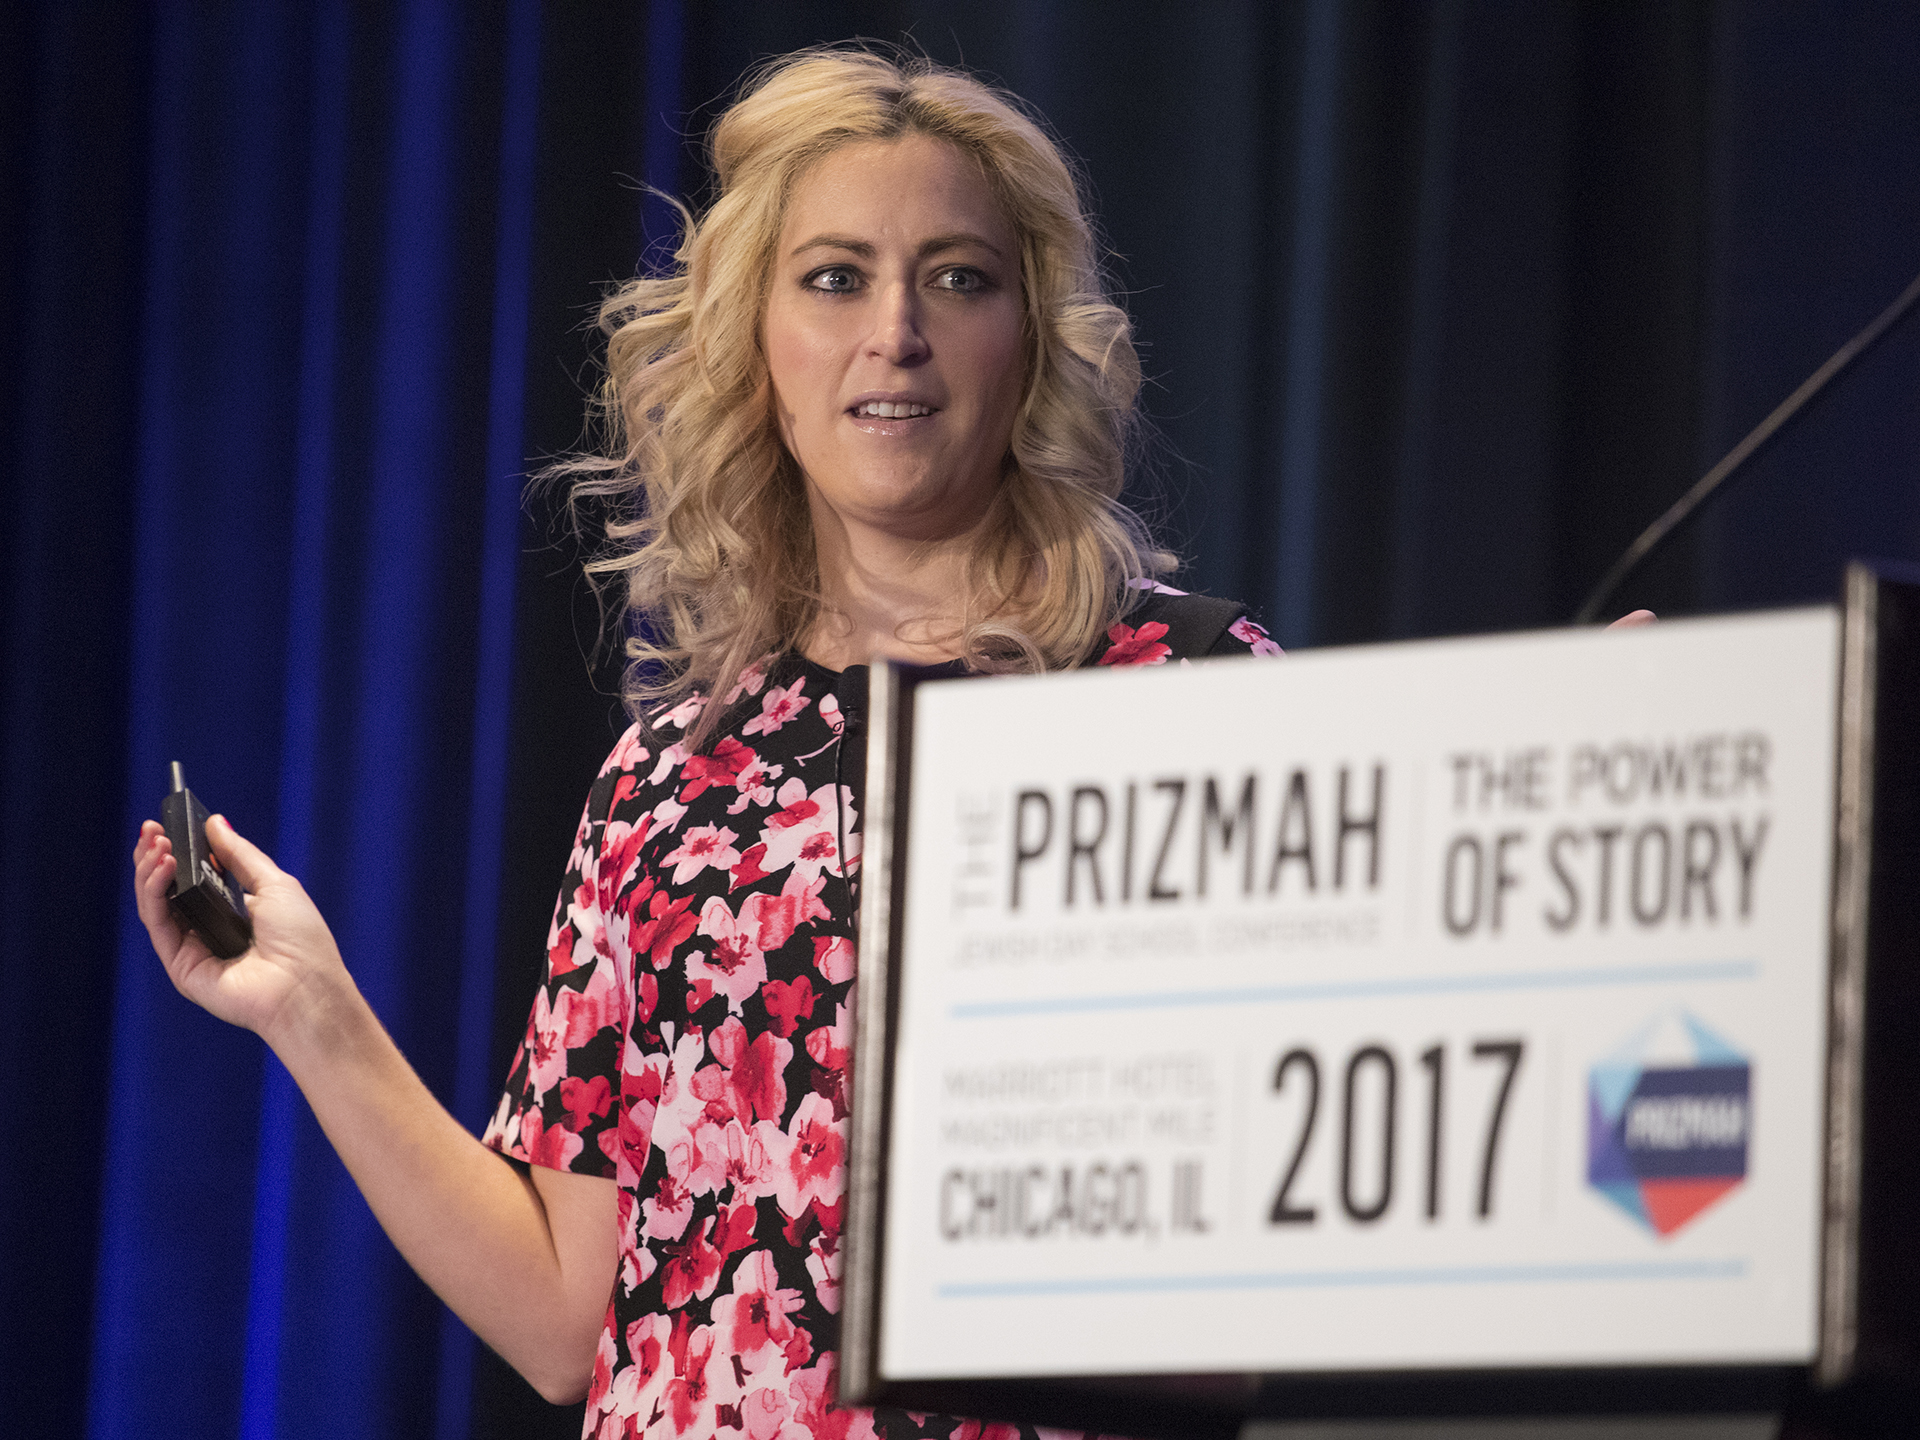 Prizmah Conference 2017, Jane McGonigal